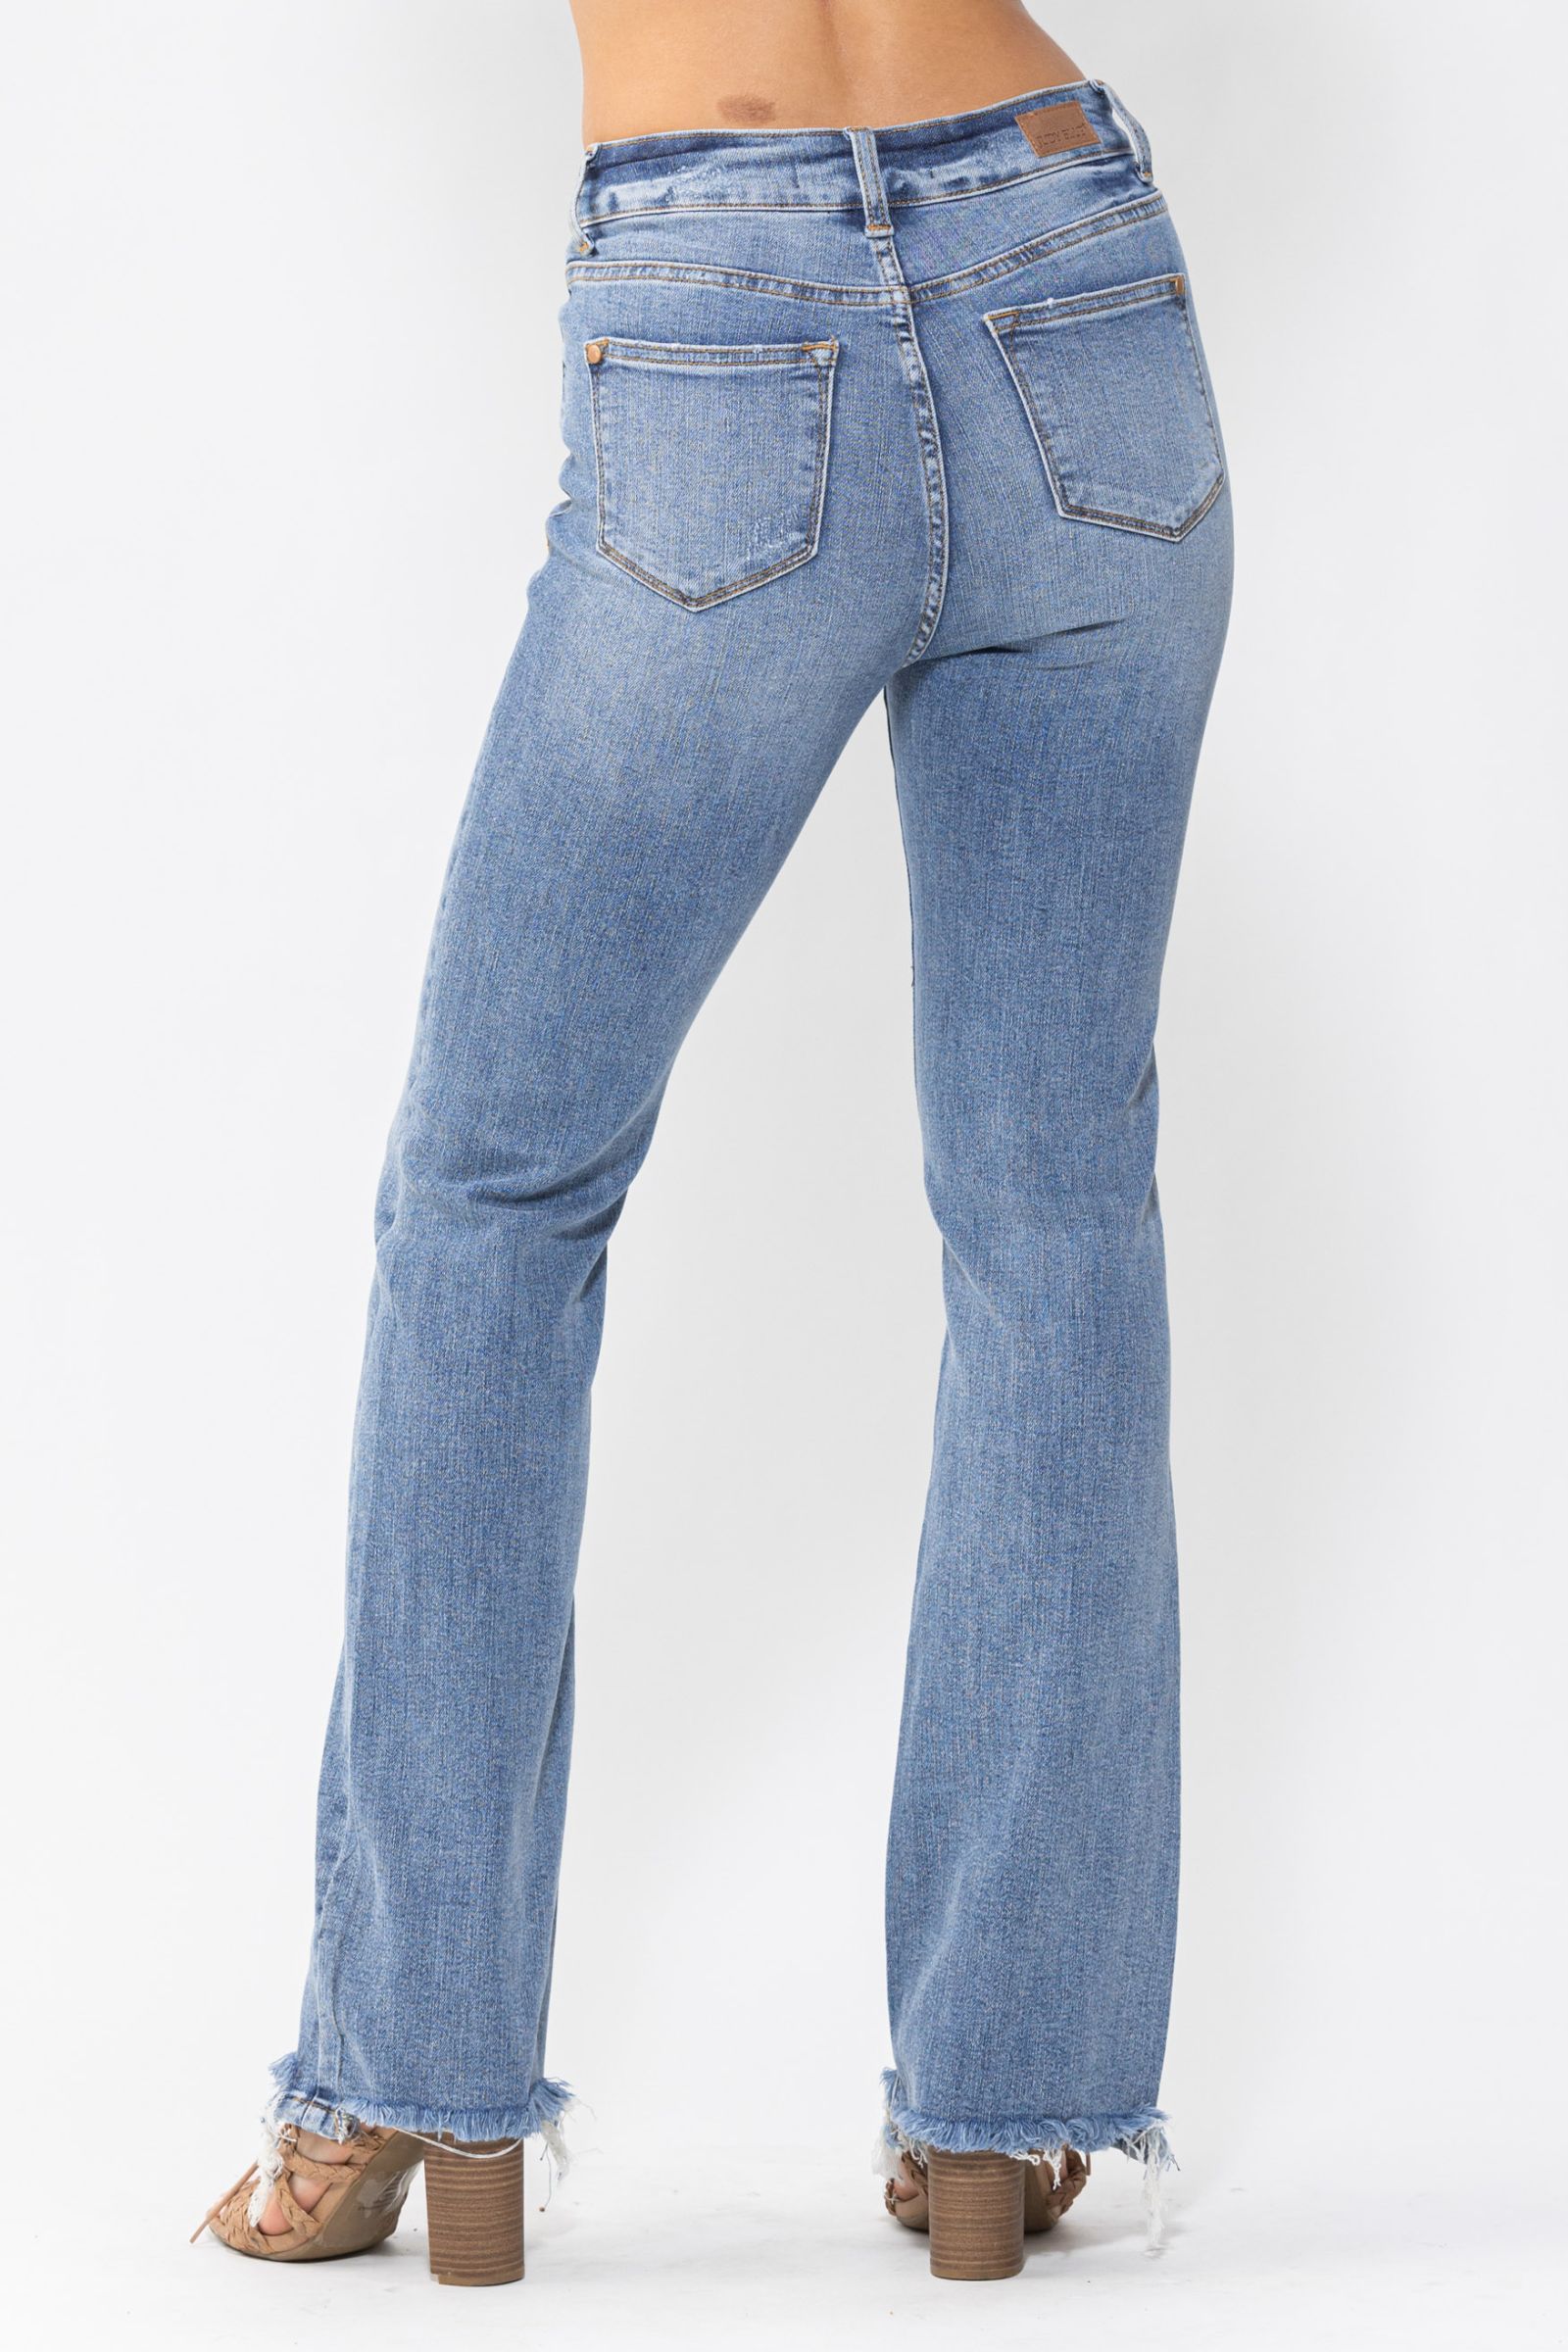 Judy Blue Jeans 88140